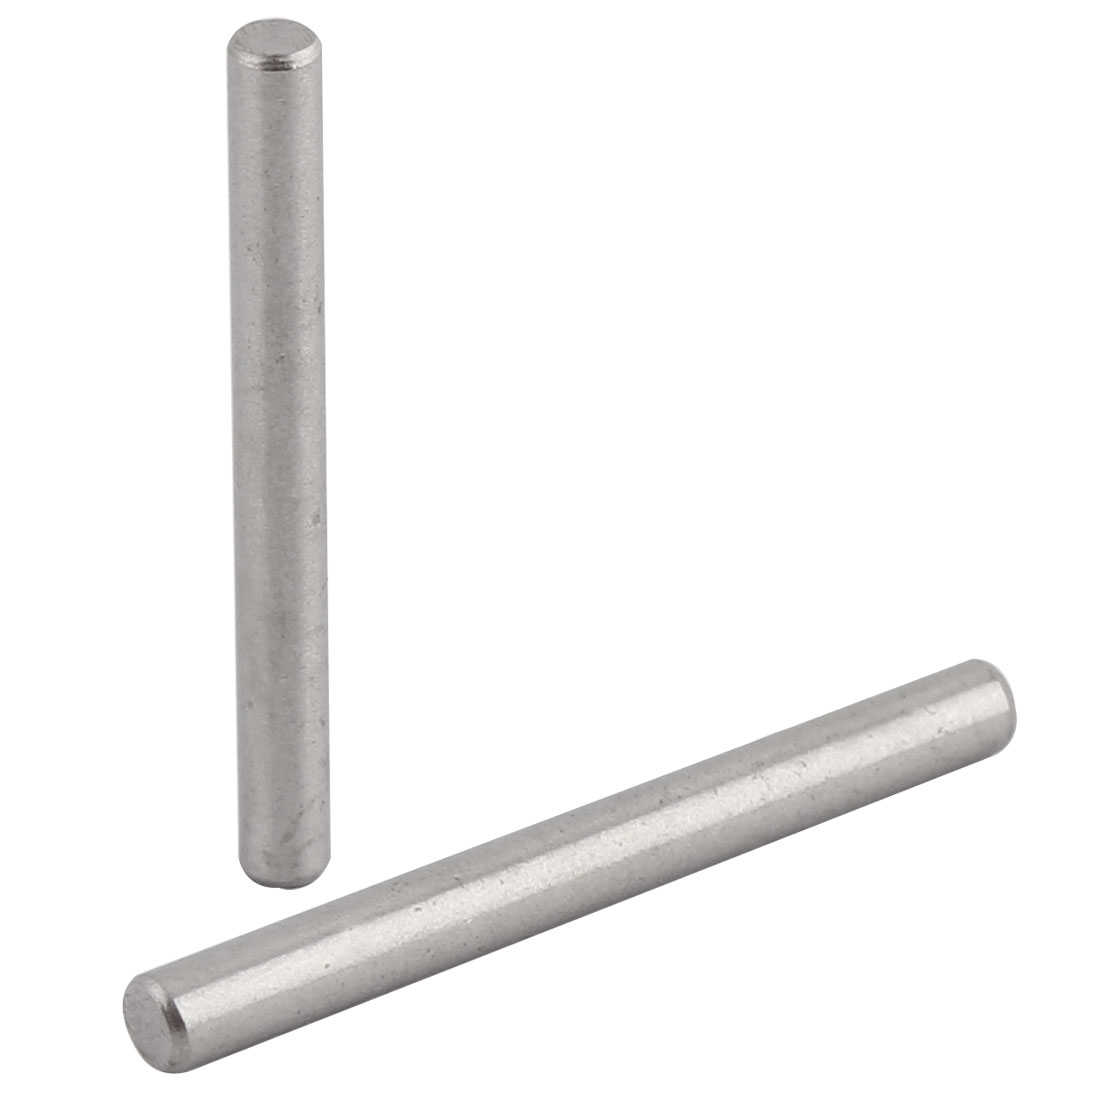 Straight Retaining 304 Stainless Steel Dowel Pins Rod Fasten Elements 3mm x 30mm